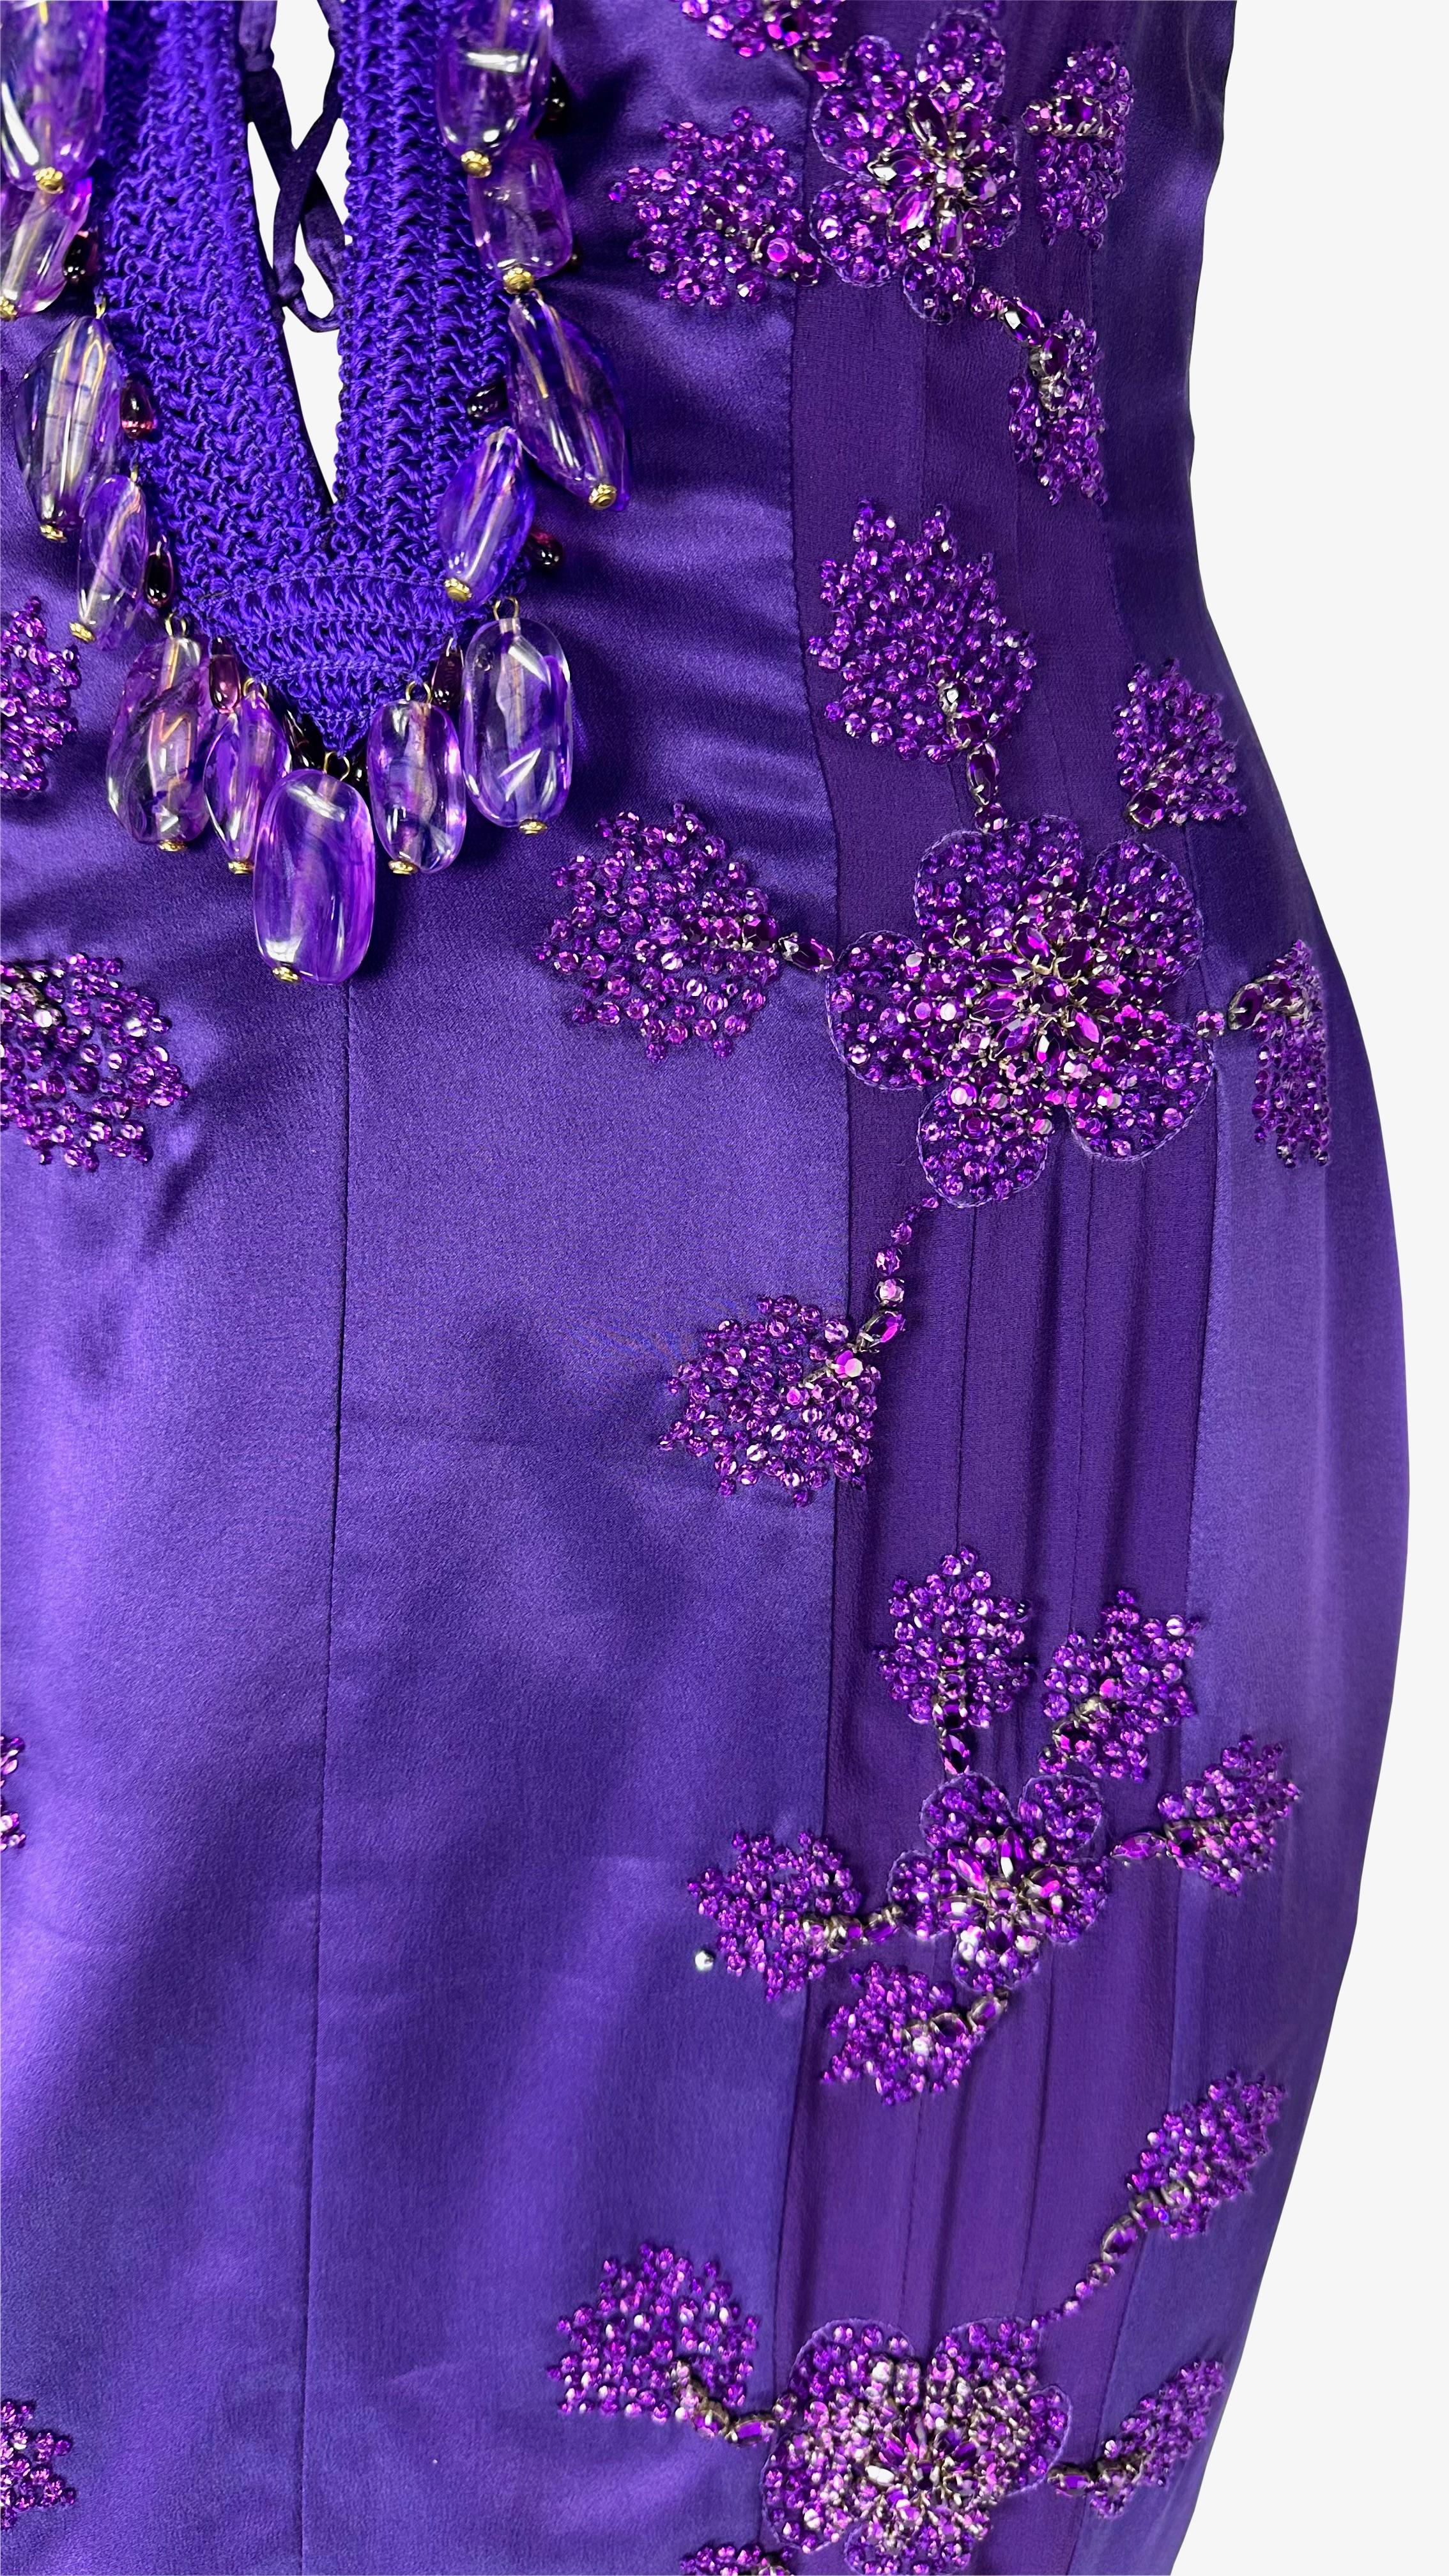 S/S 2005 Emanuel Ungaro by Giambattista Valli Rhinestone Purple Lace-Up Gown For Sale 5